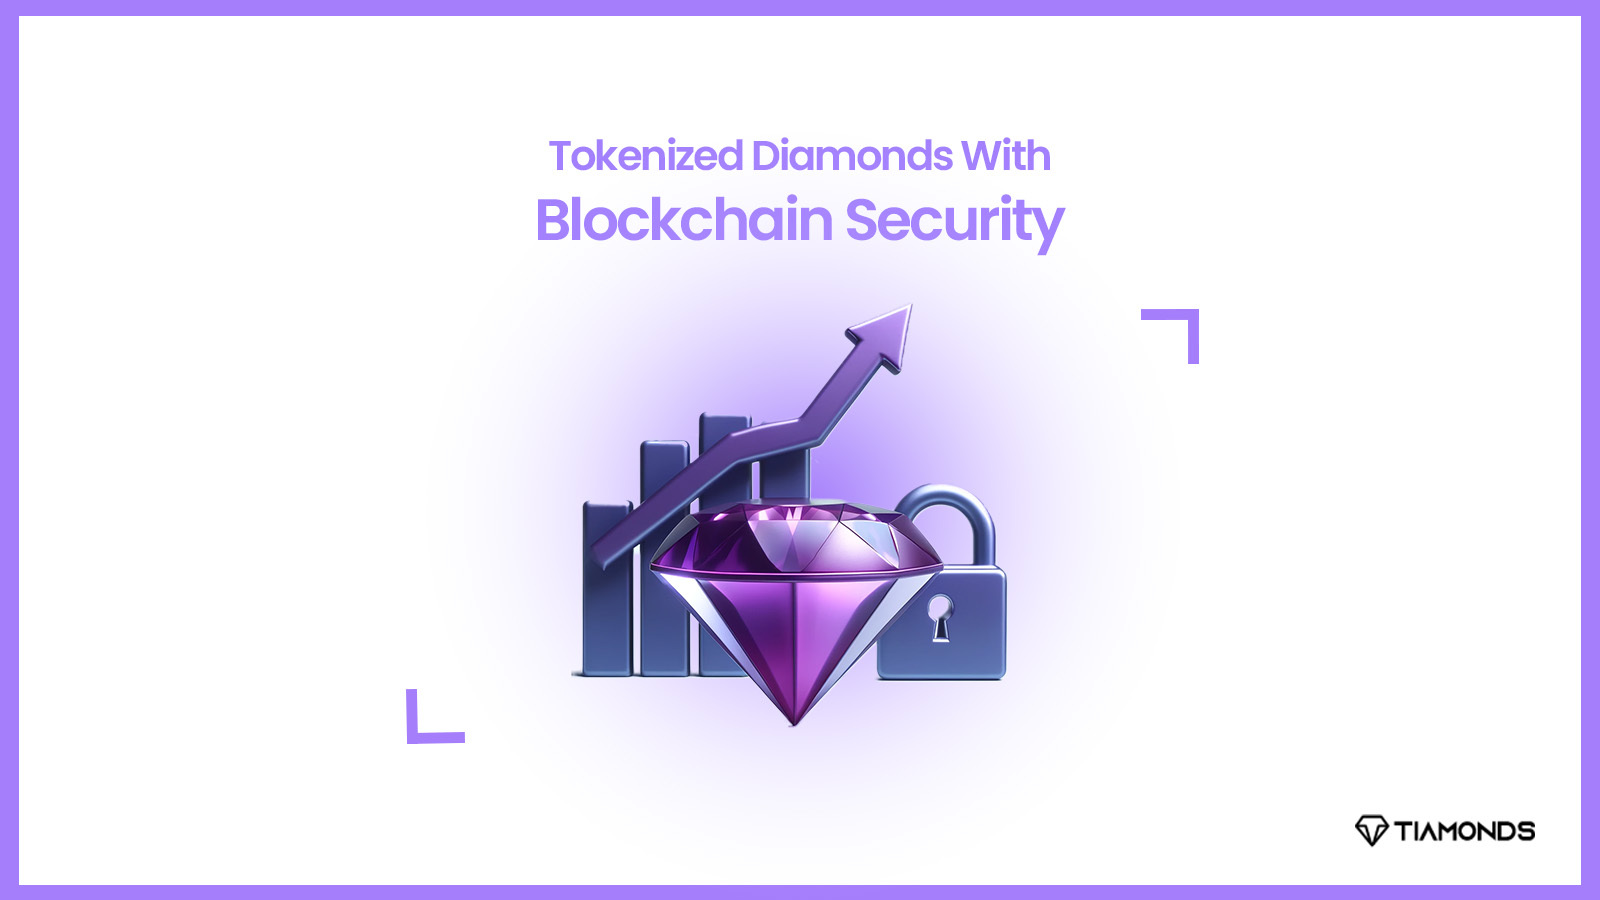 Tokenized Diamonds With Blockchain Security